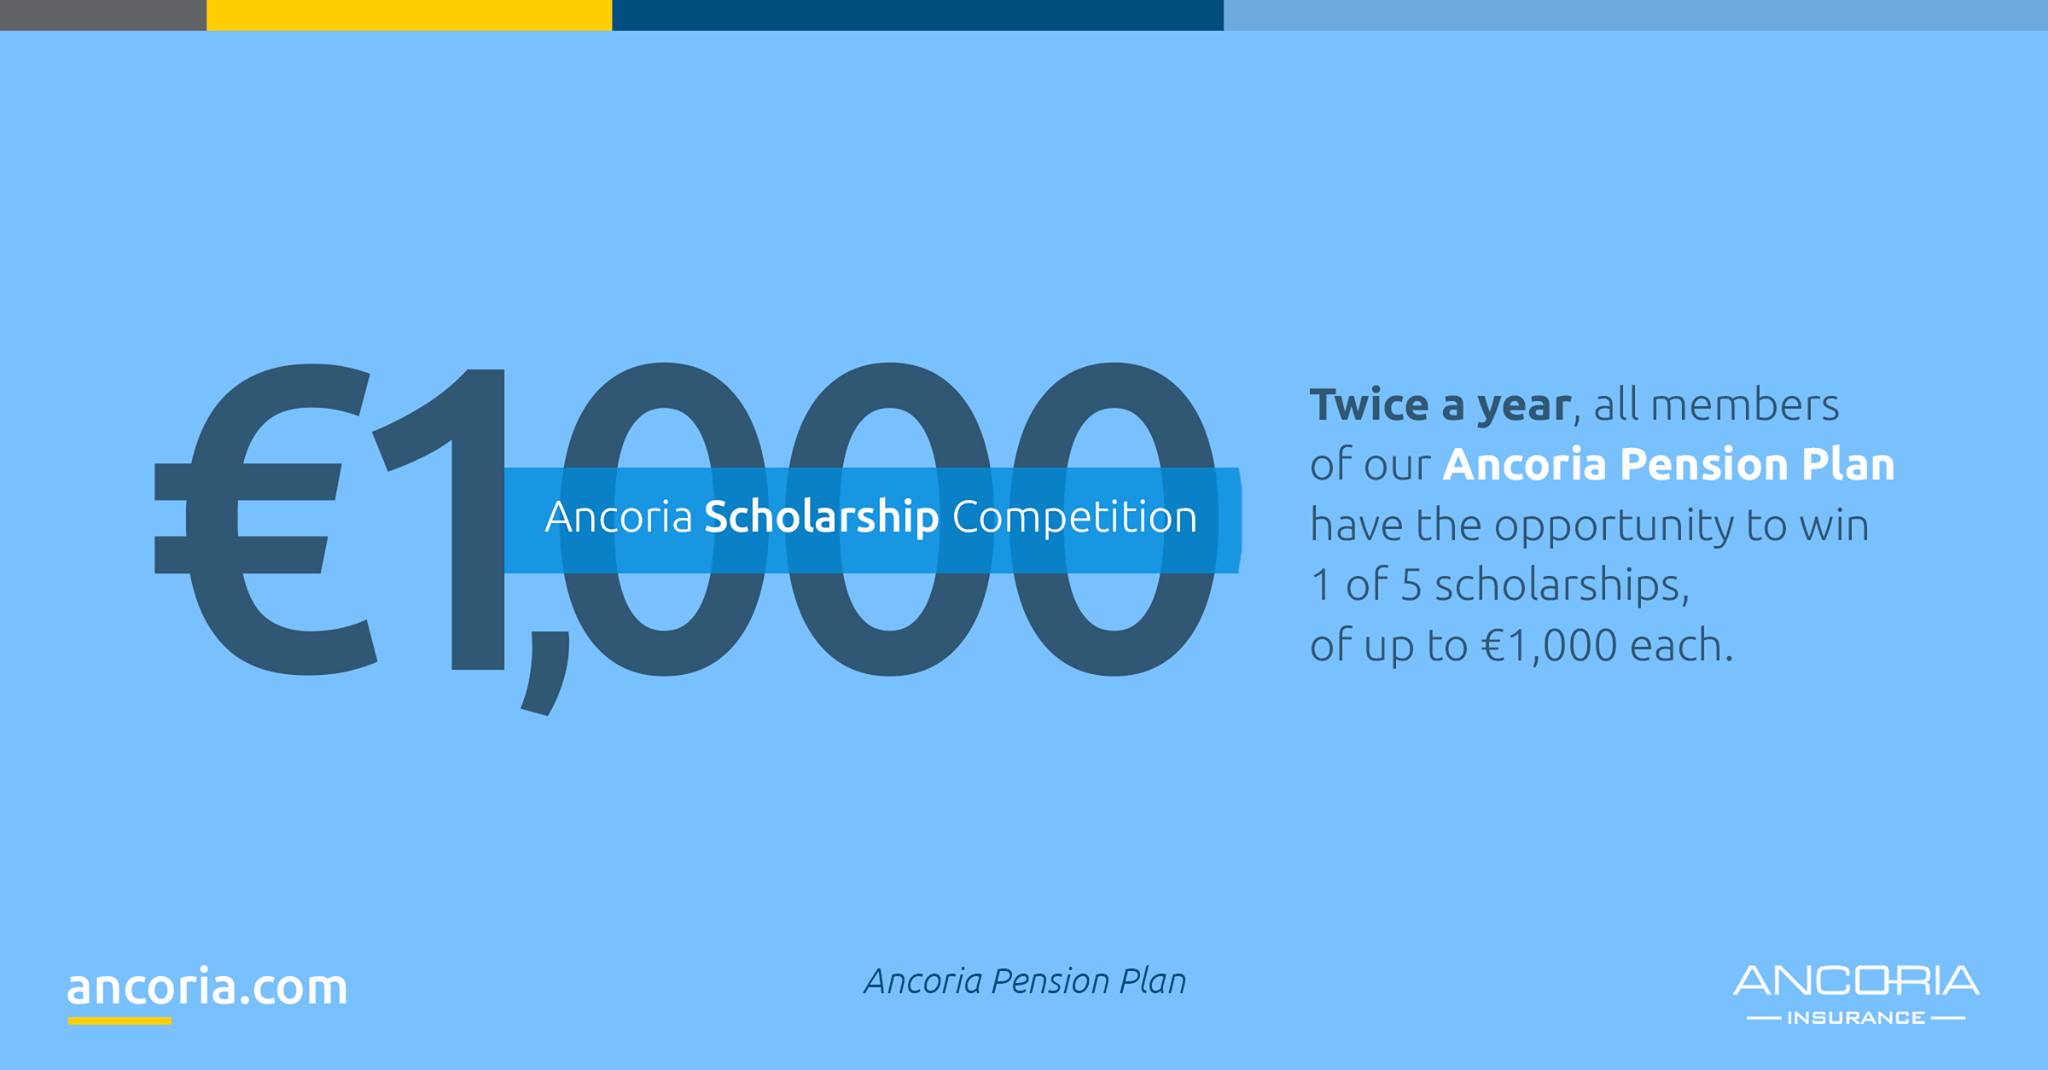 Ancoria Insurance: Κληρώνει 5 υποτροφίες αξίας 1,000 ευρώ